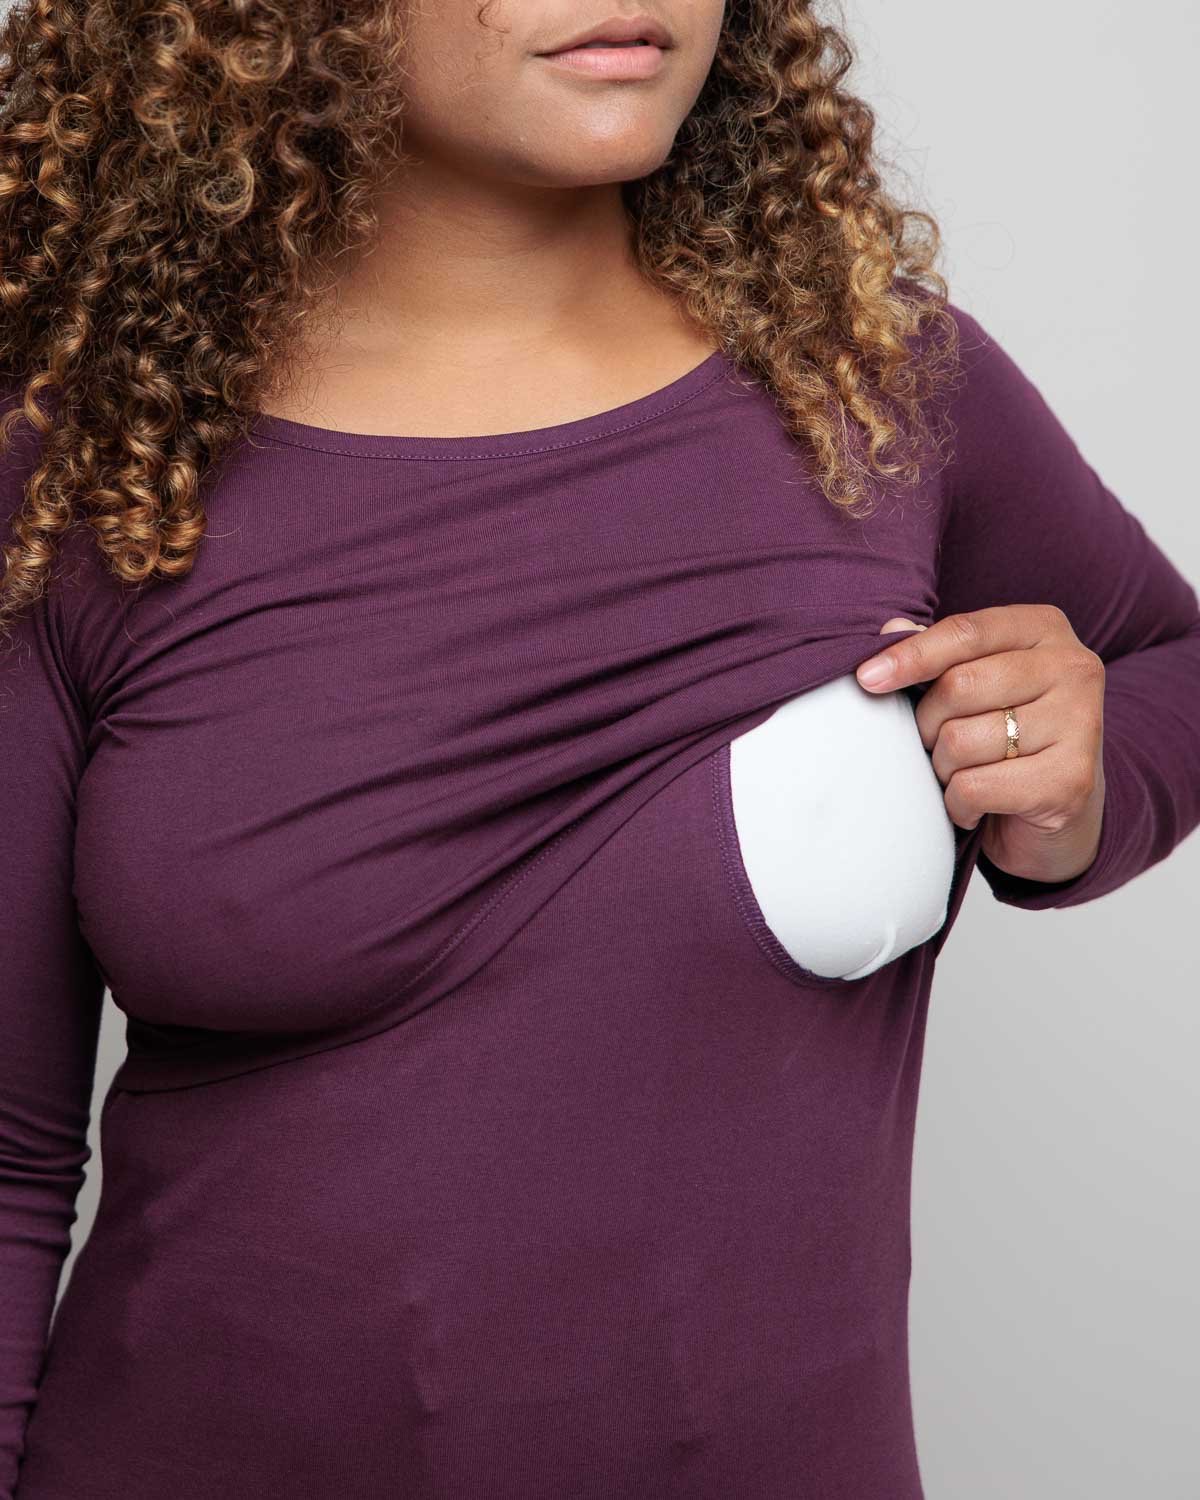 Organic Cotton Long Sleeve nursing Top in Navy for breastfeeding